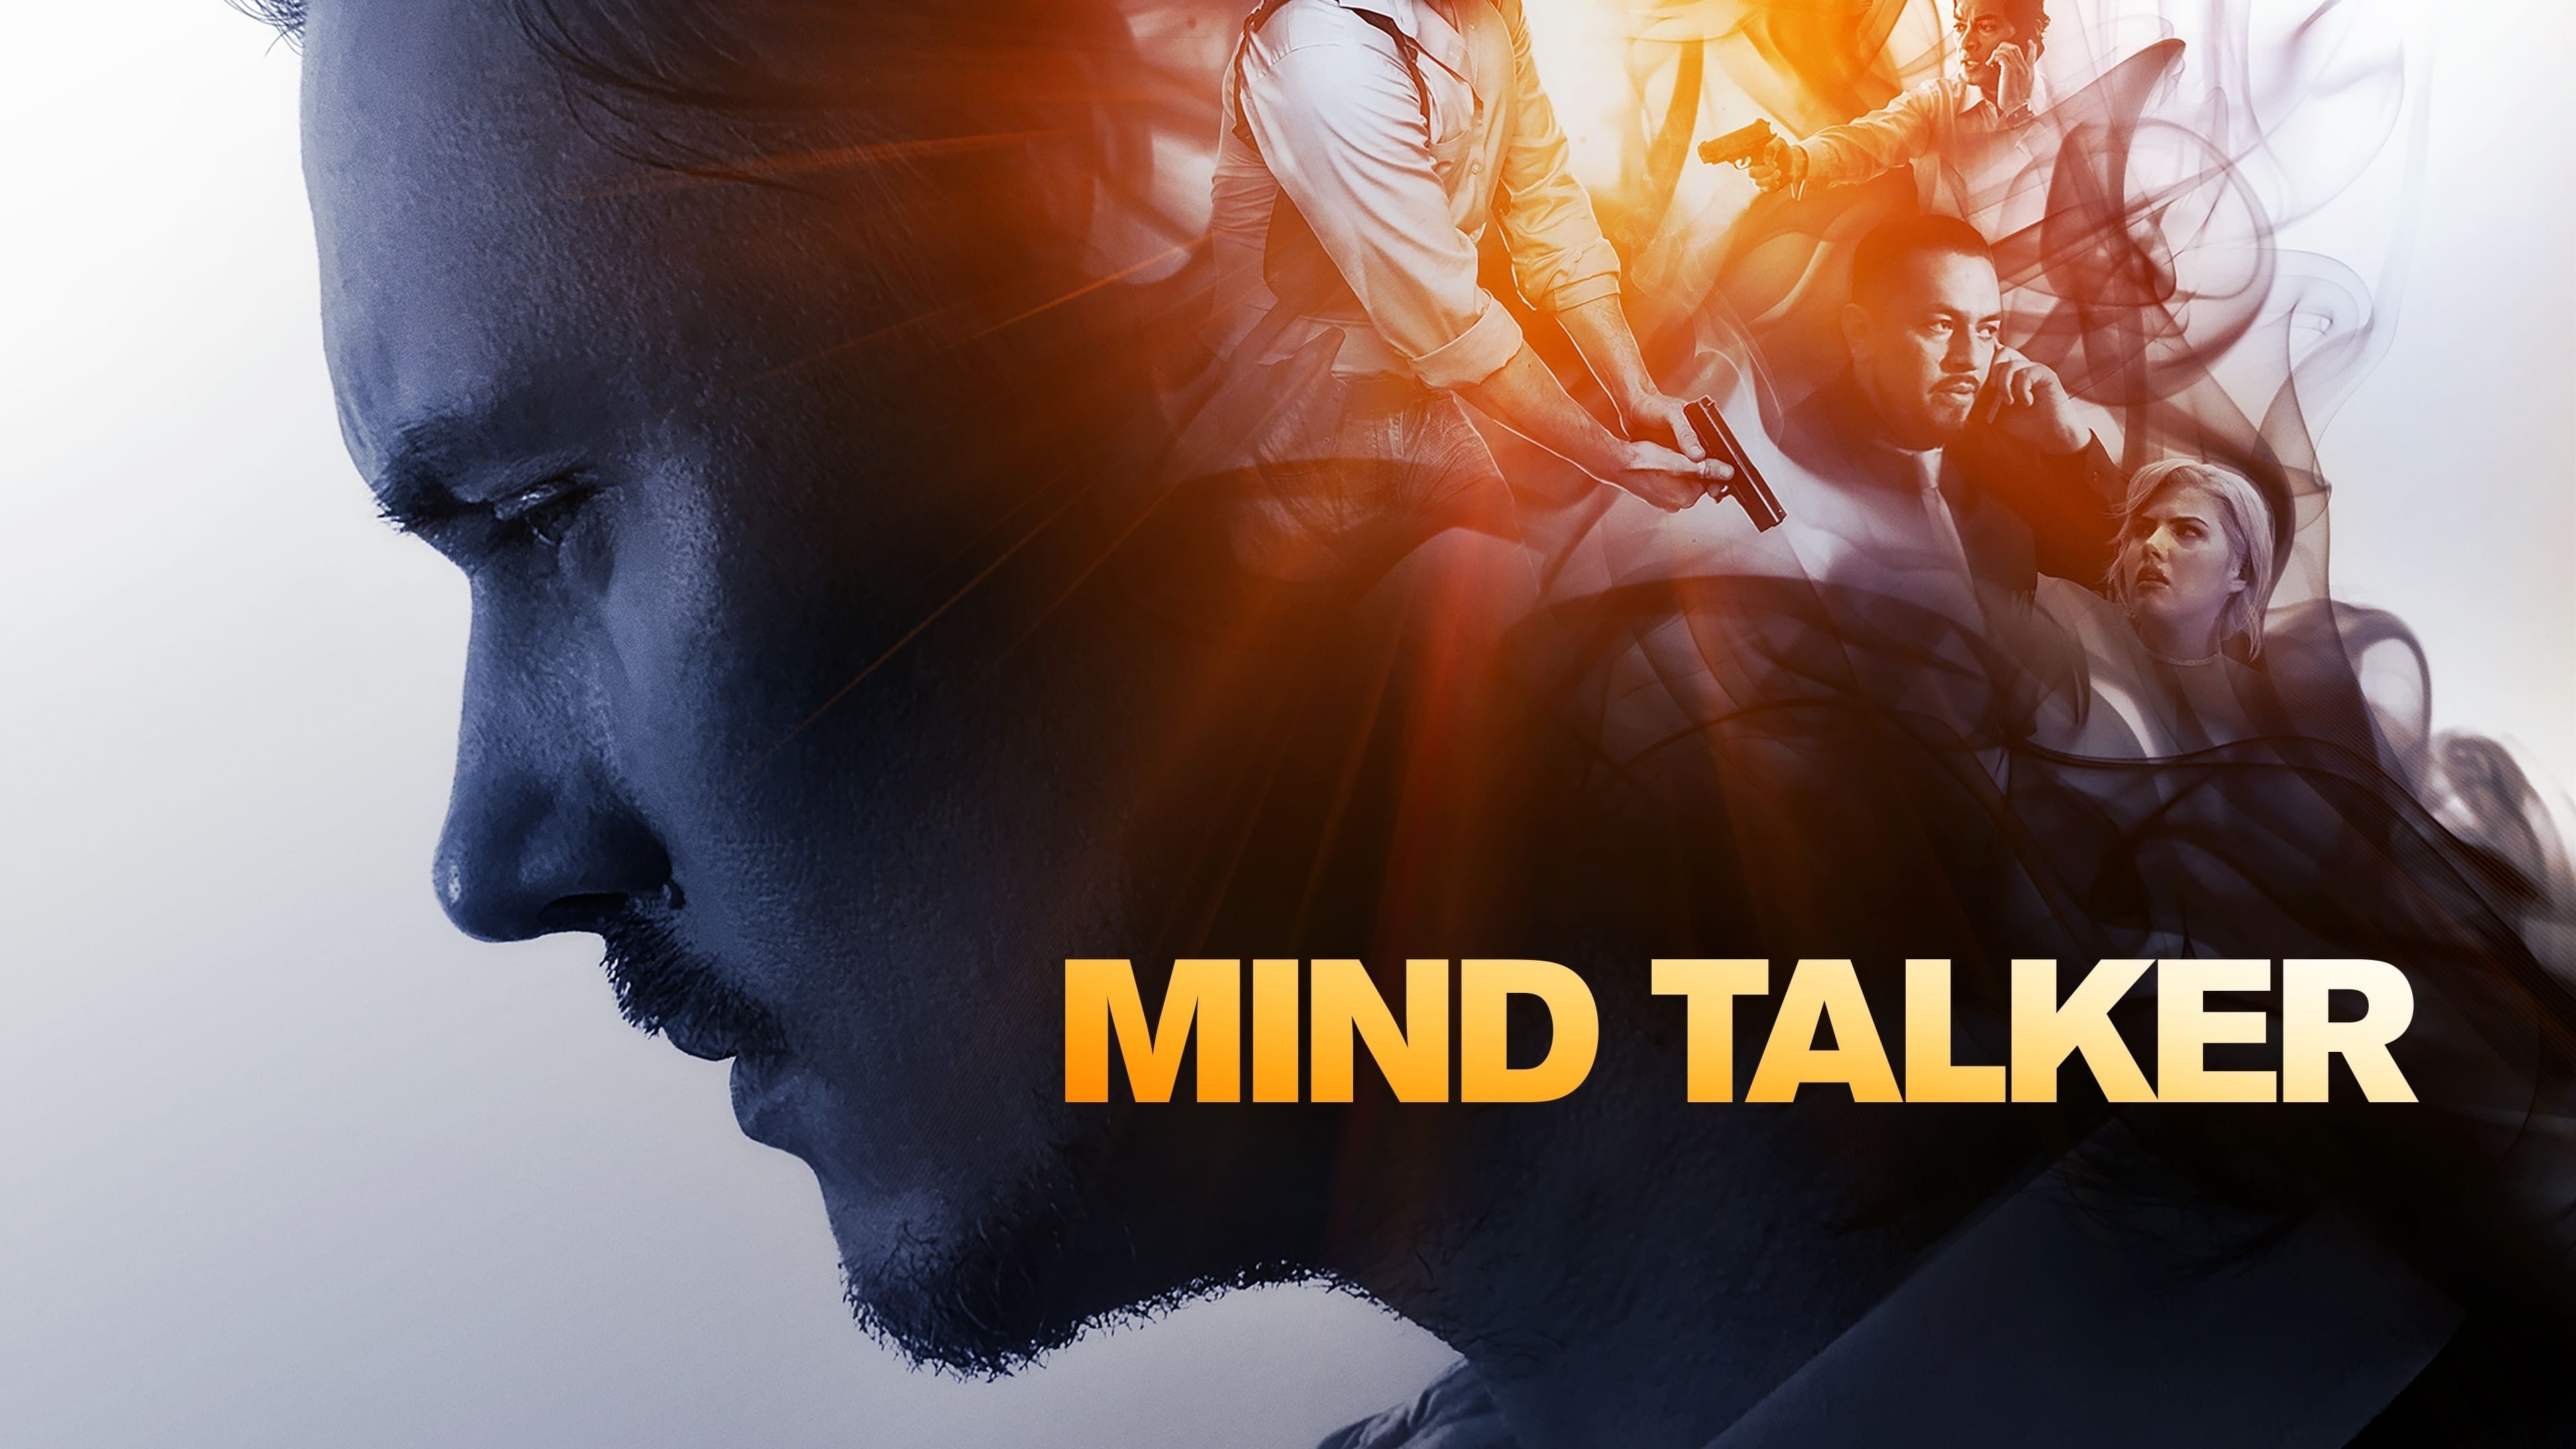 Voir film Mind Talker en streaming